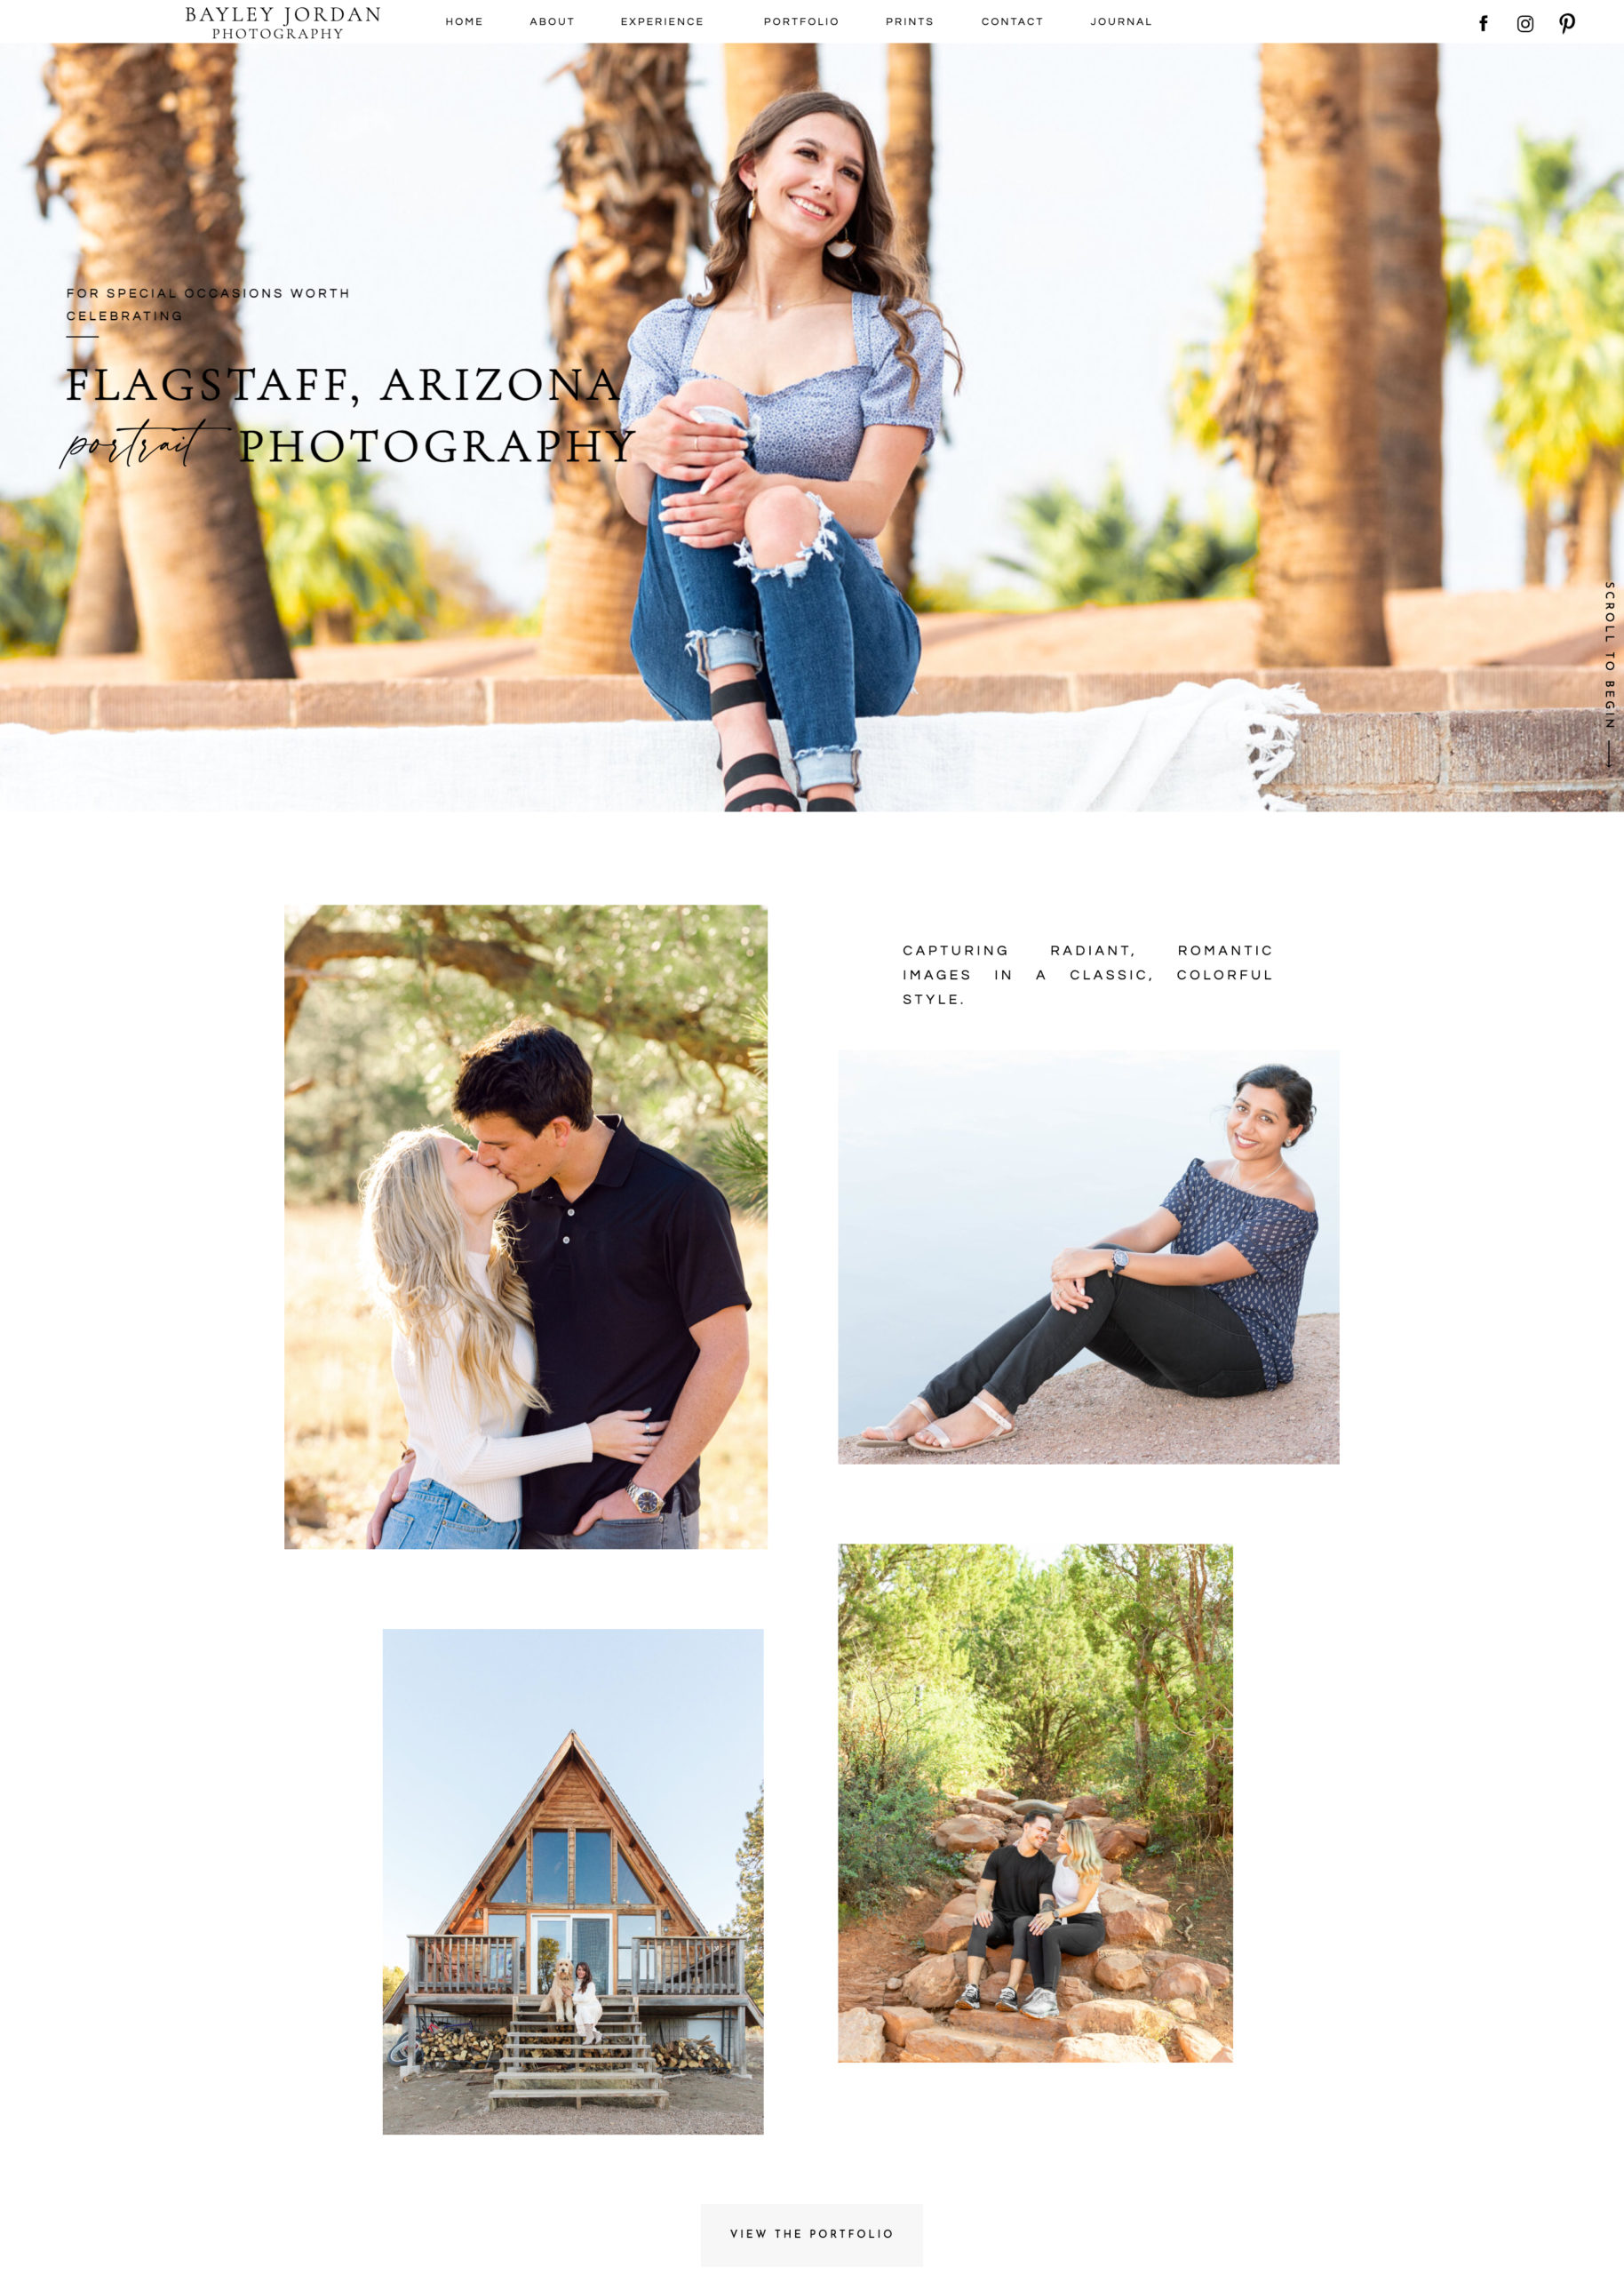 Website for Flagstaff Arizona portrait photographer Bayley Jordan